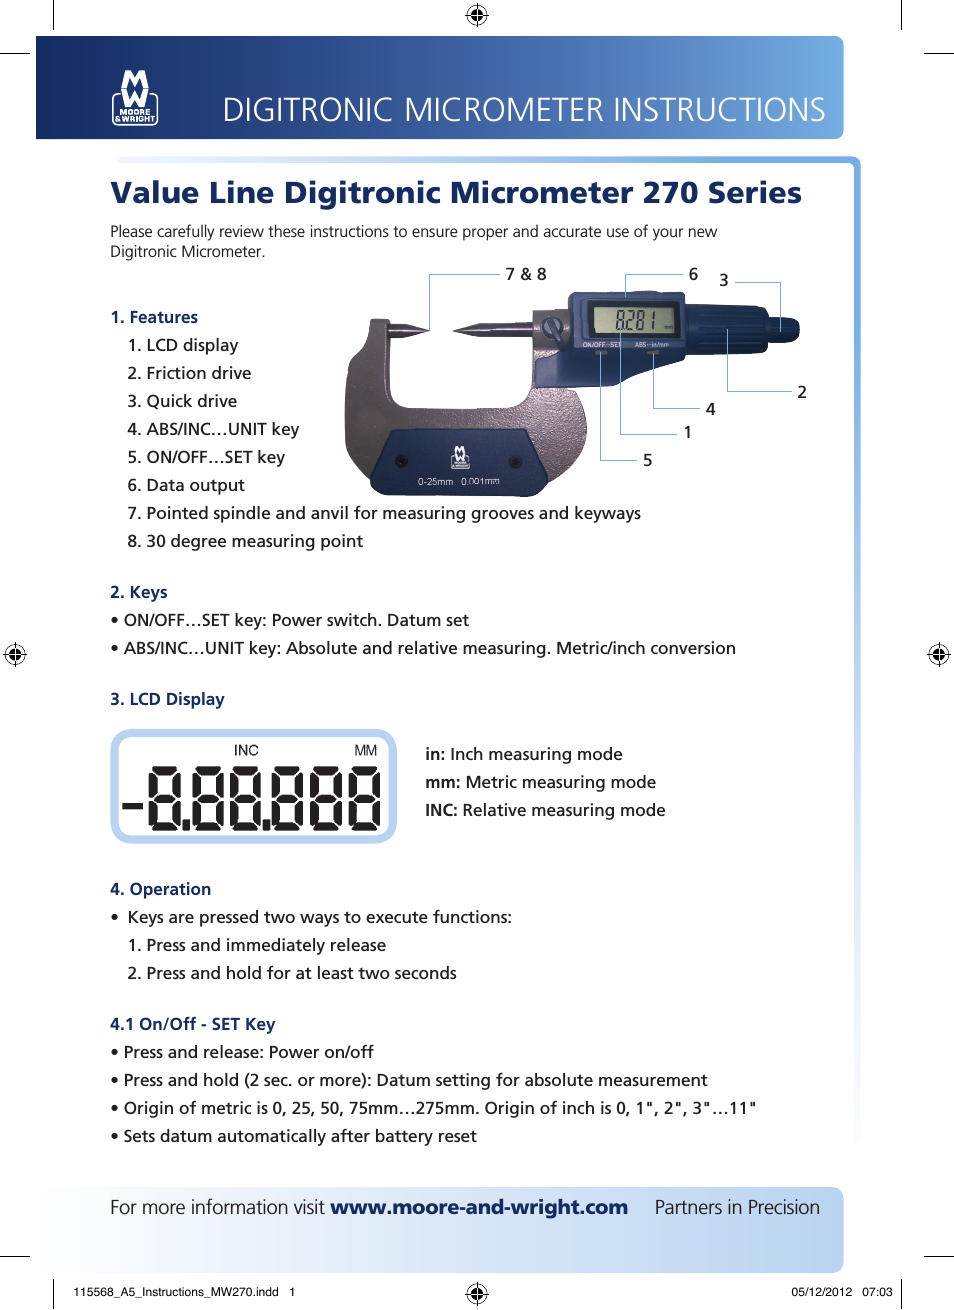 M&W Value Line Digitronic Micrometer 270 Series